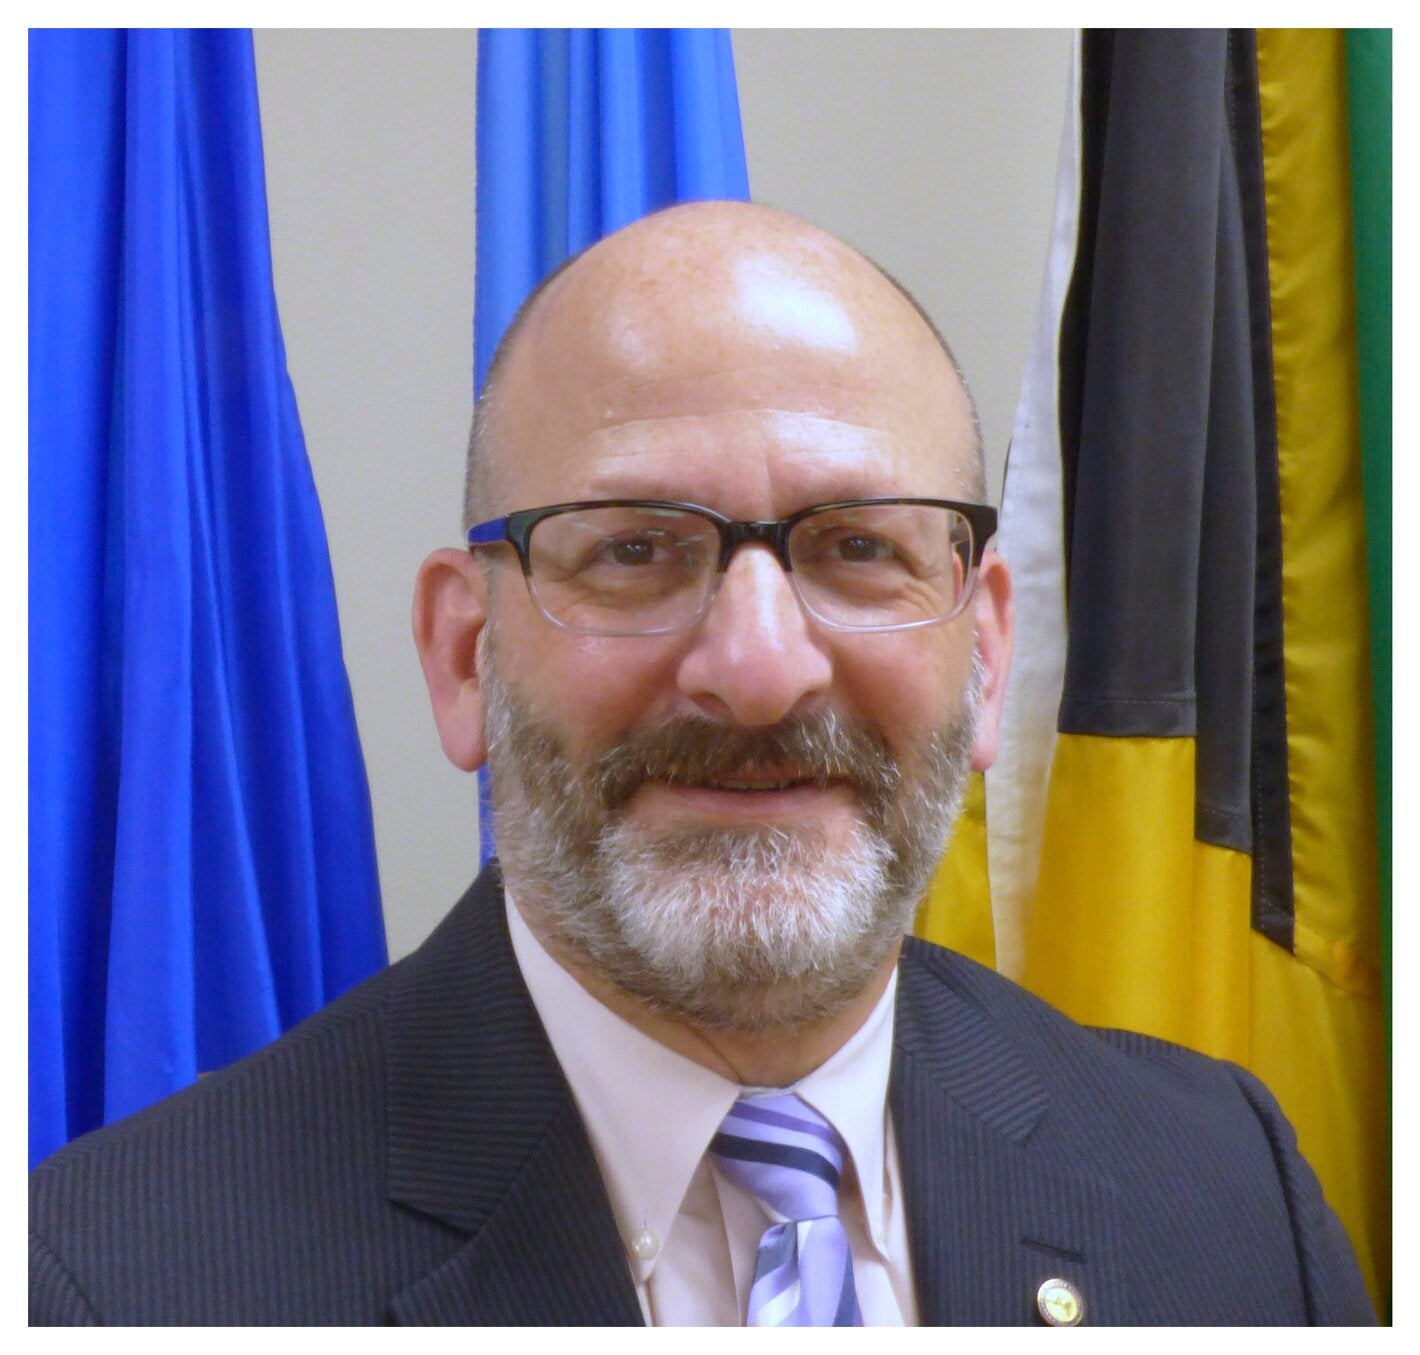 Mr. Ian Stein, Pan American Health Organization (PAHO) / World Health Organization (WHO) representative to Jamaica, Bermuda and the Cayman Islands 